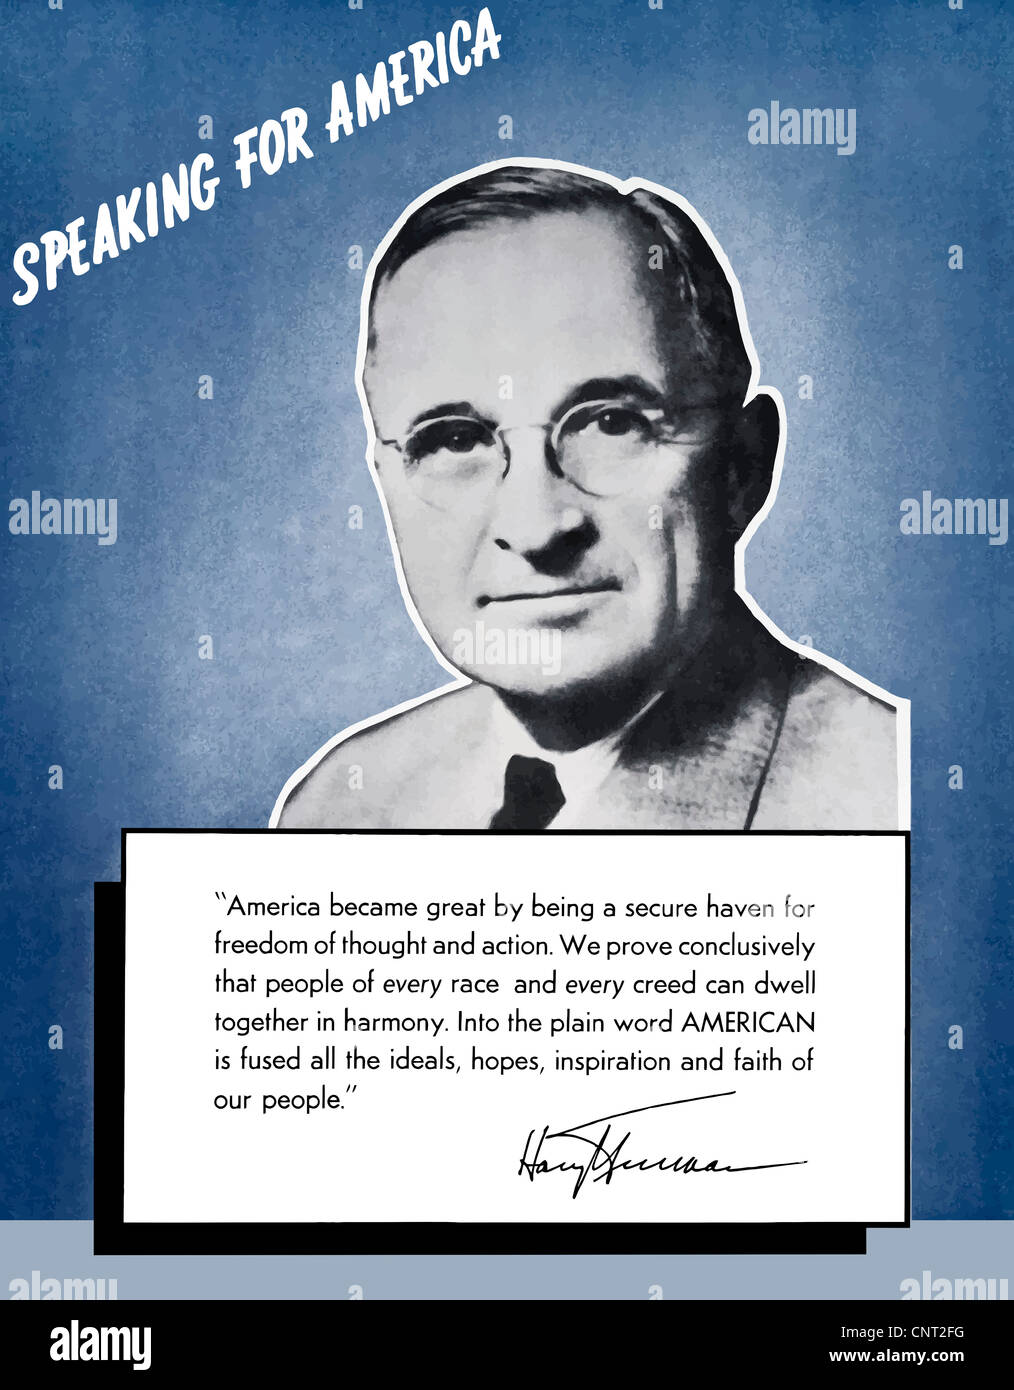 Digitally restored war propaganda poster. President Harry S. Truman Speaking For America. Stock Photo